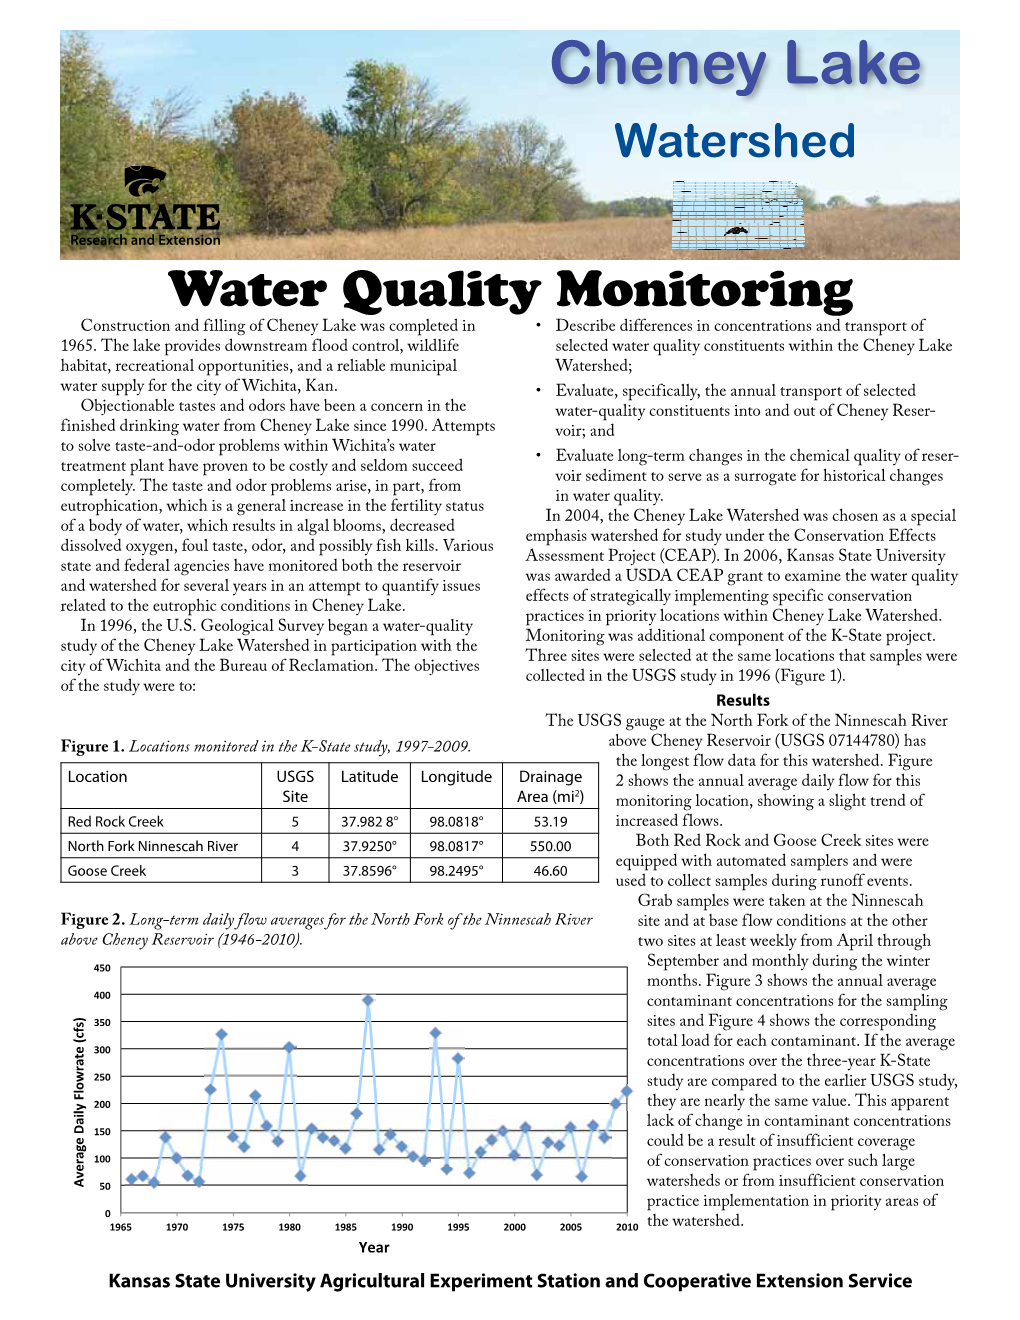 MF3037 Cheney Lake Watershed: Water Quality Monitoring